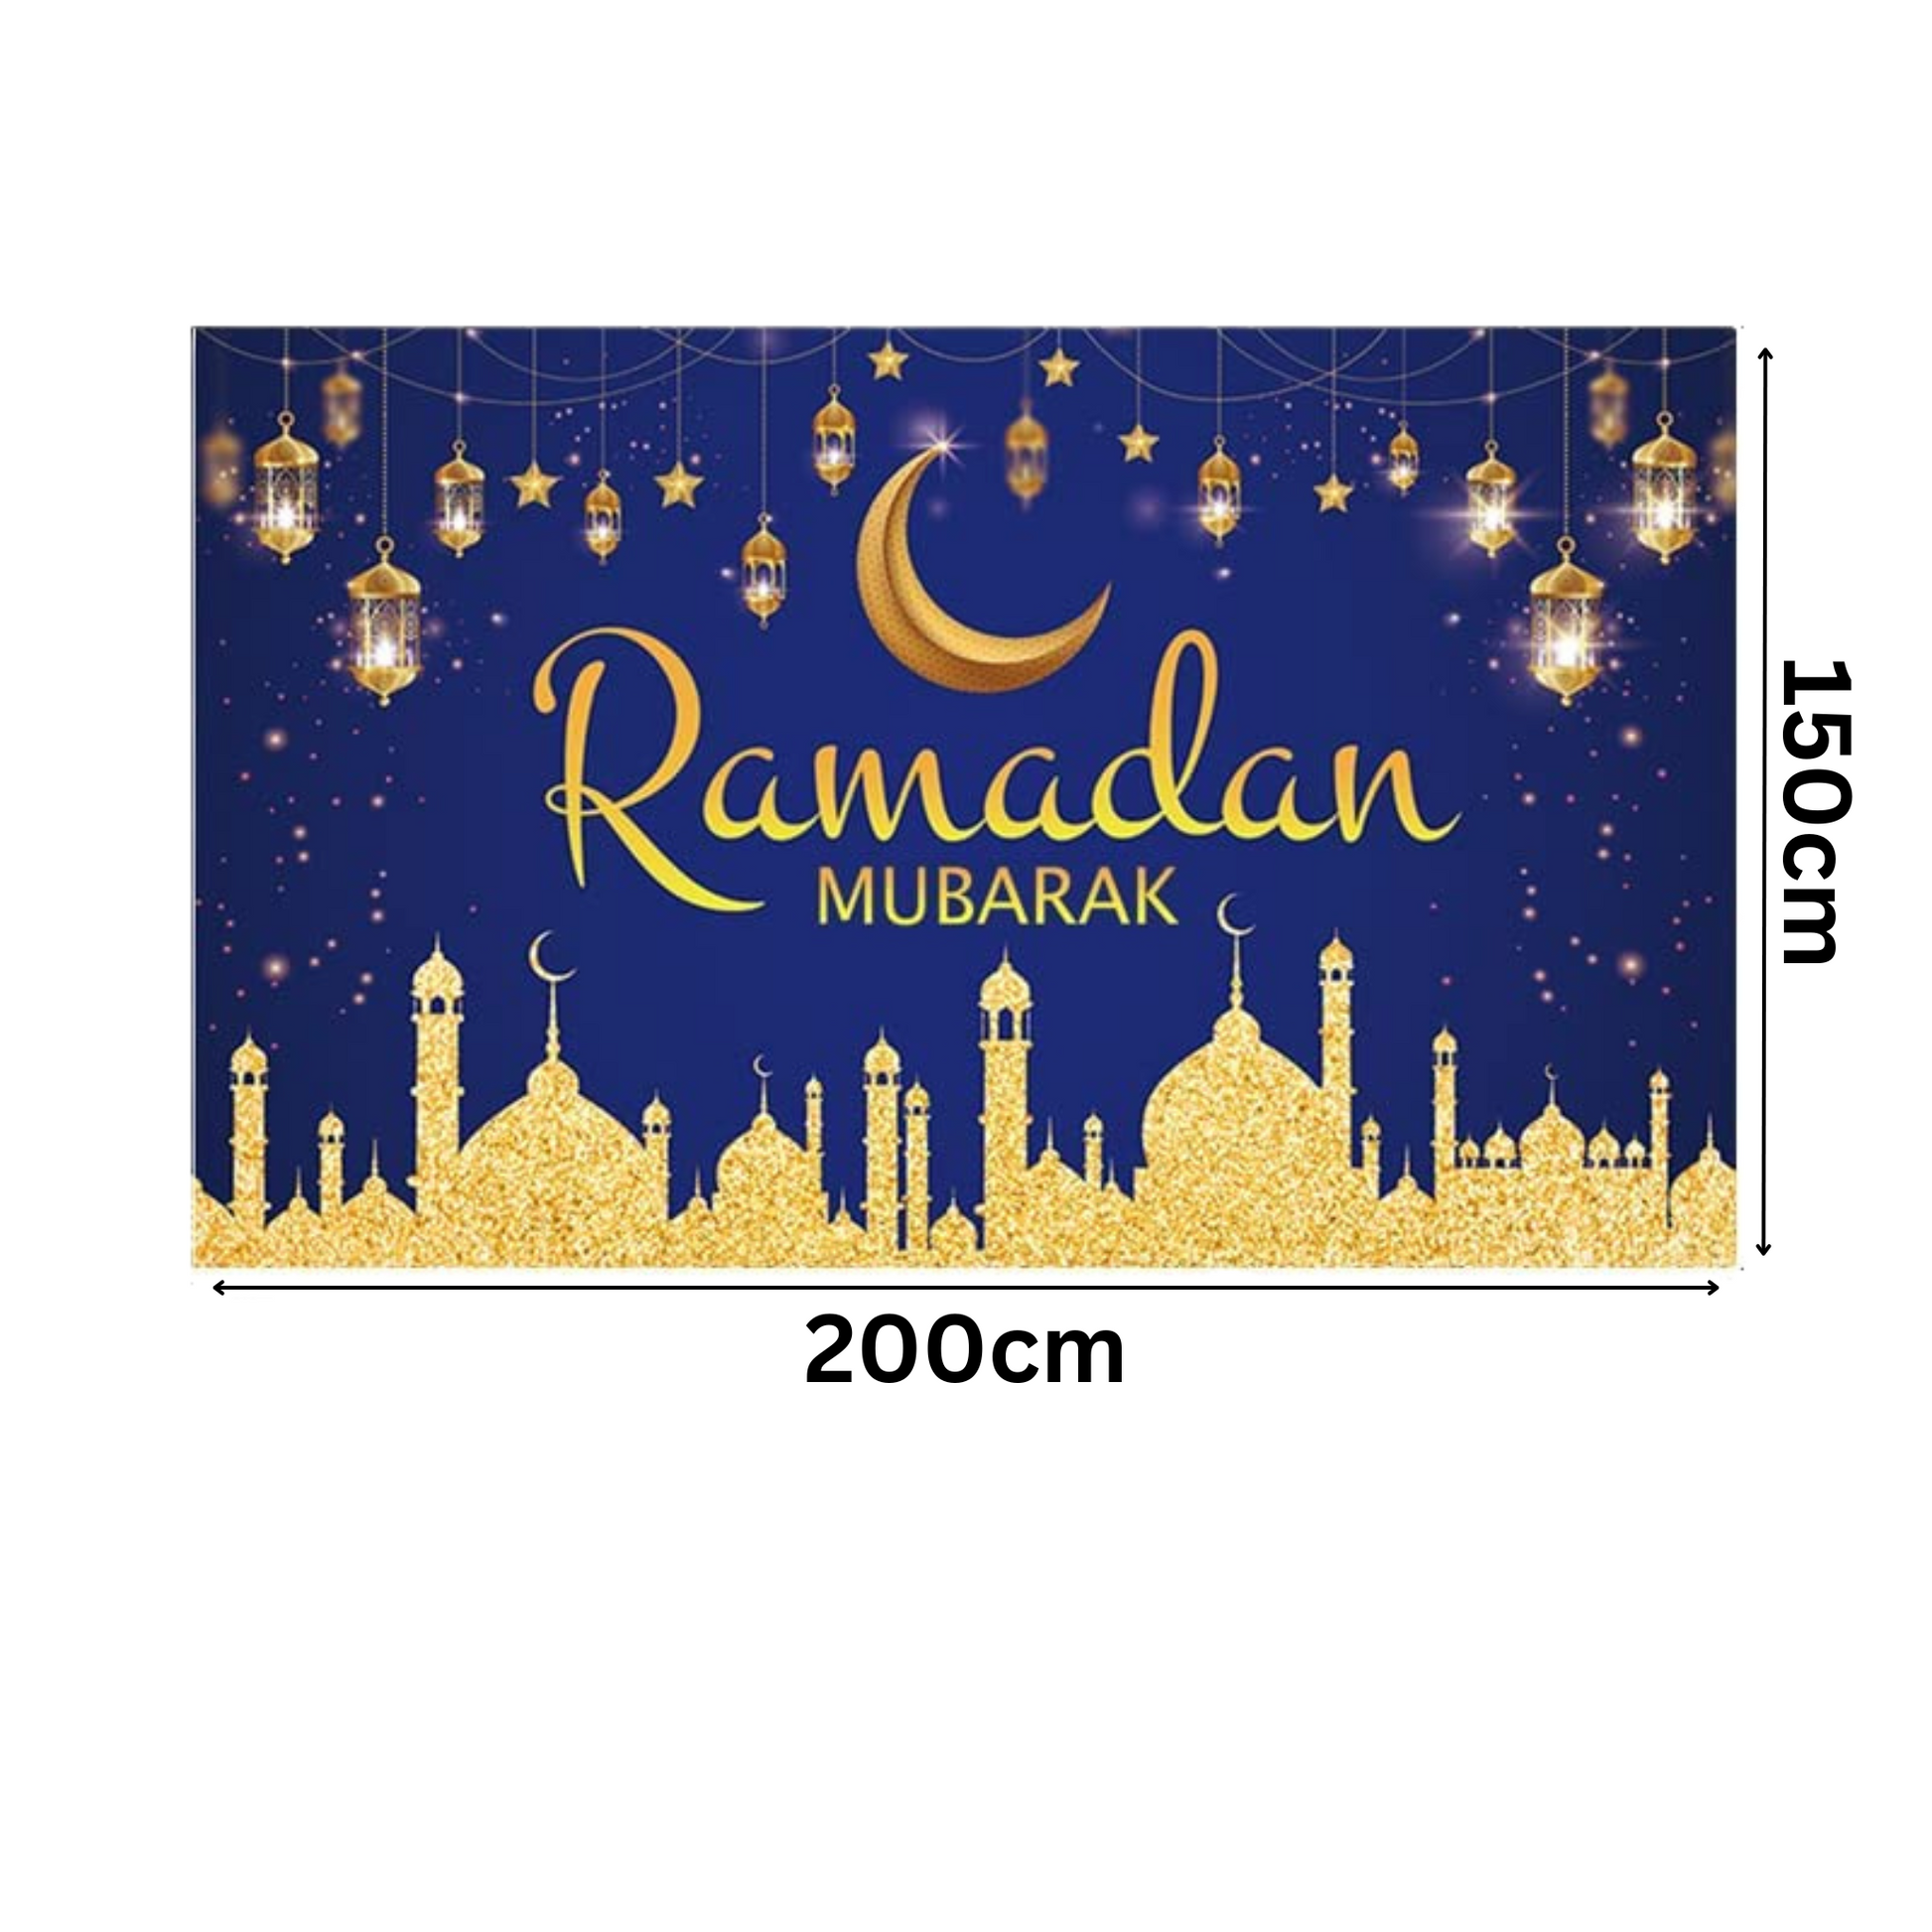 Ramadan Mubarak Backdrop with measurements